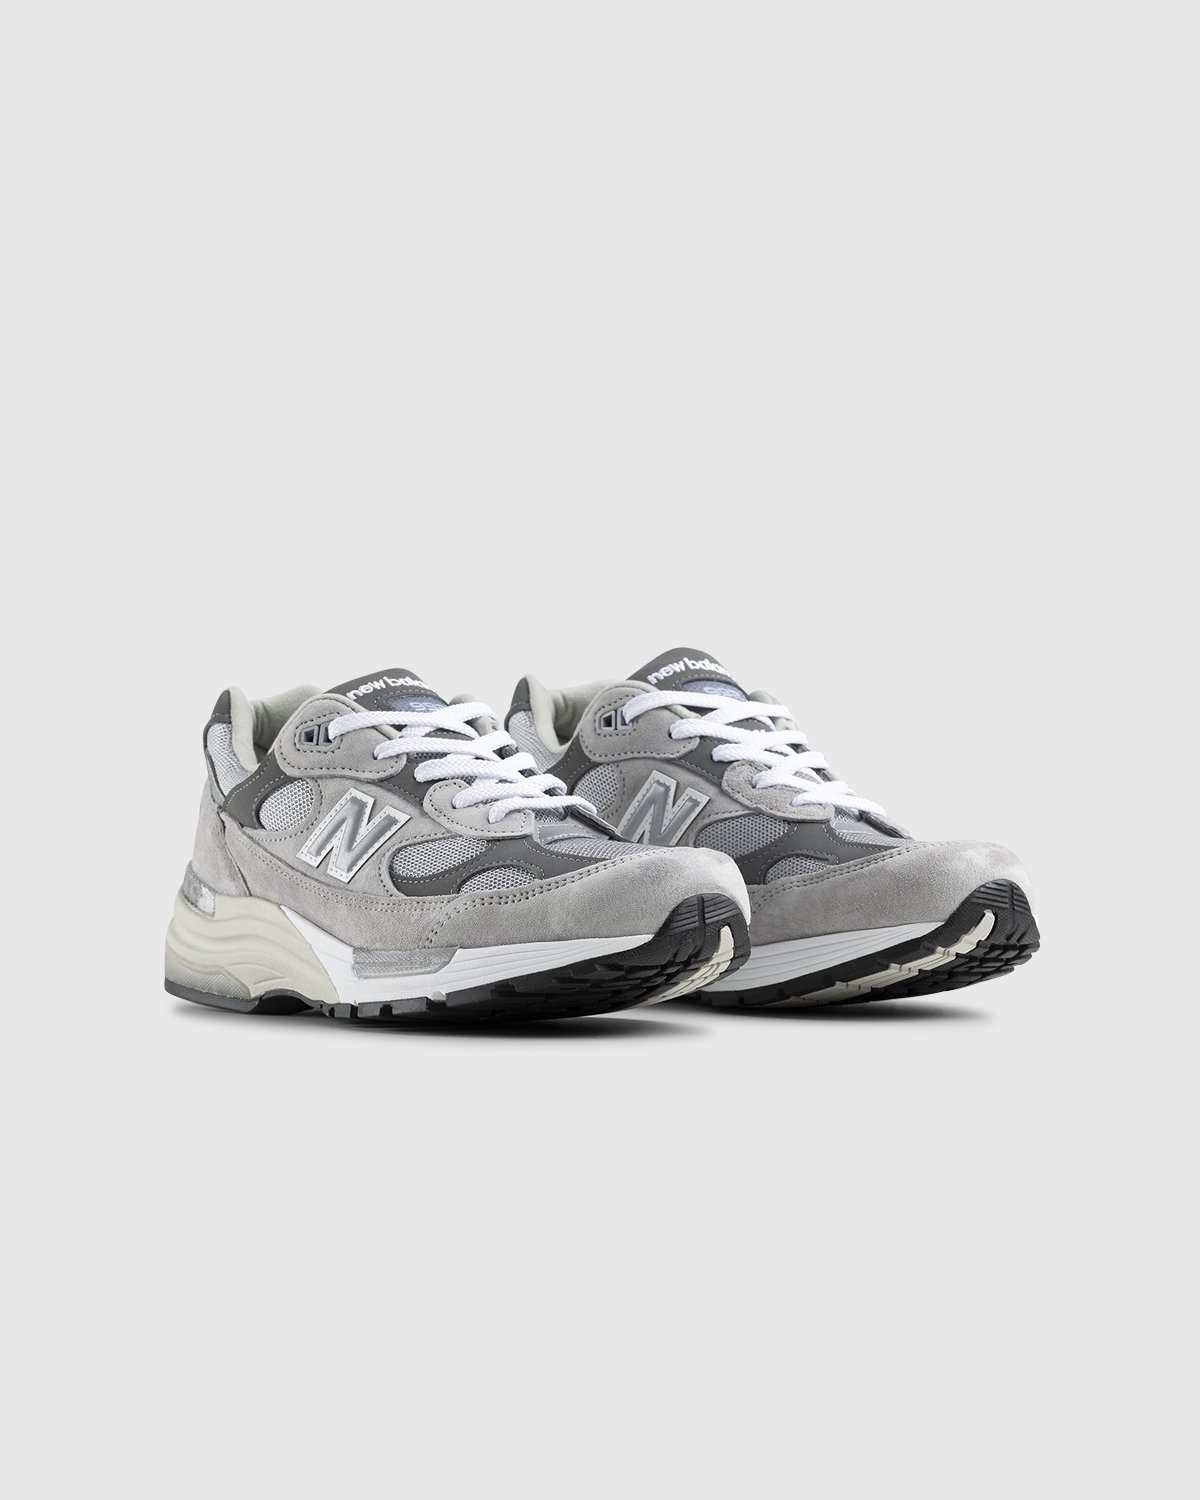 New Balance – M992GR Grey - Low Top Sneakers - Grey - Image 3